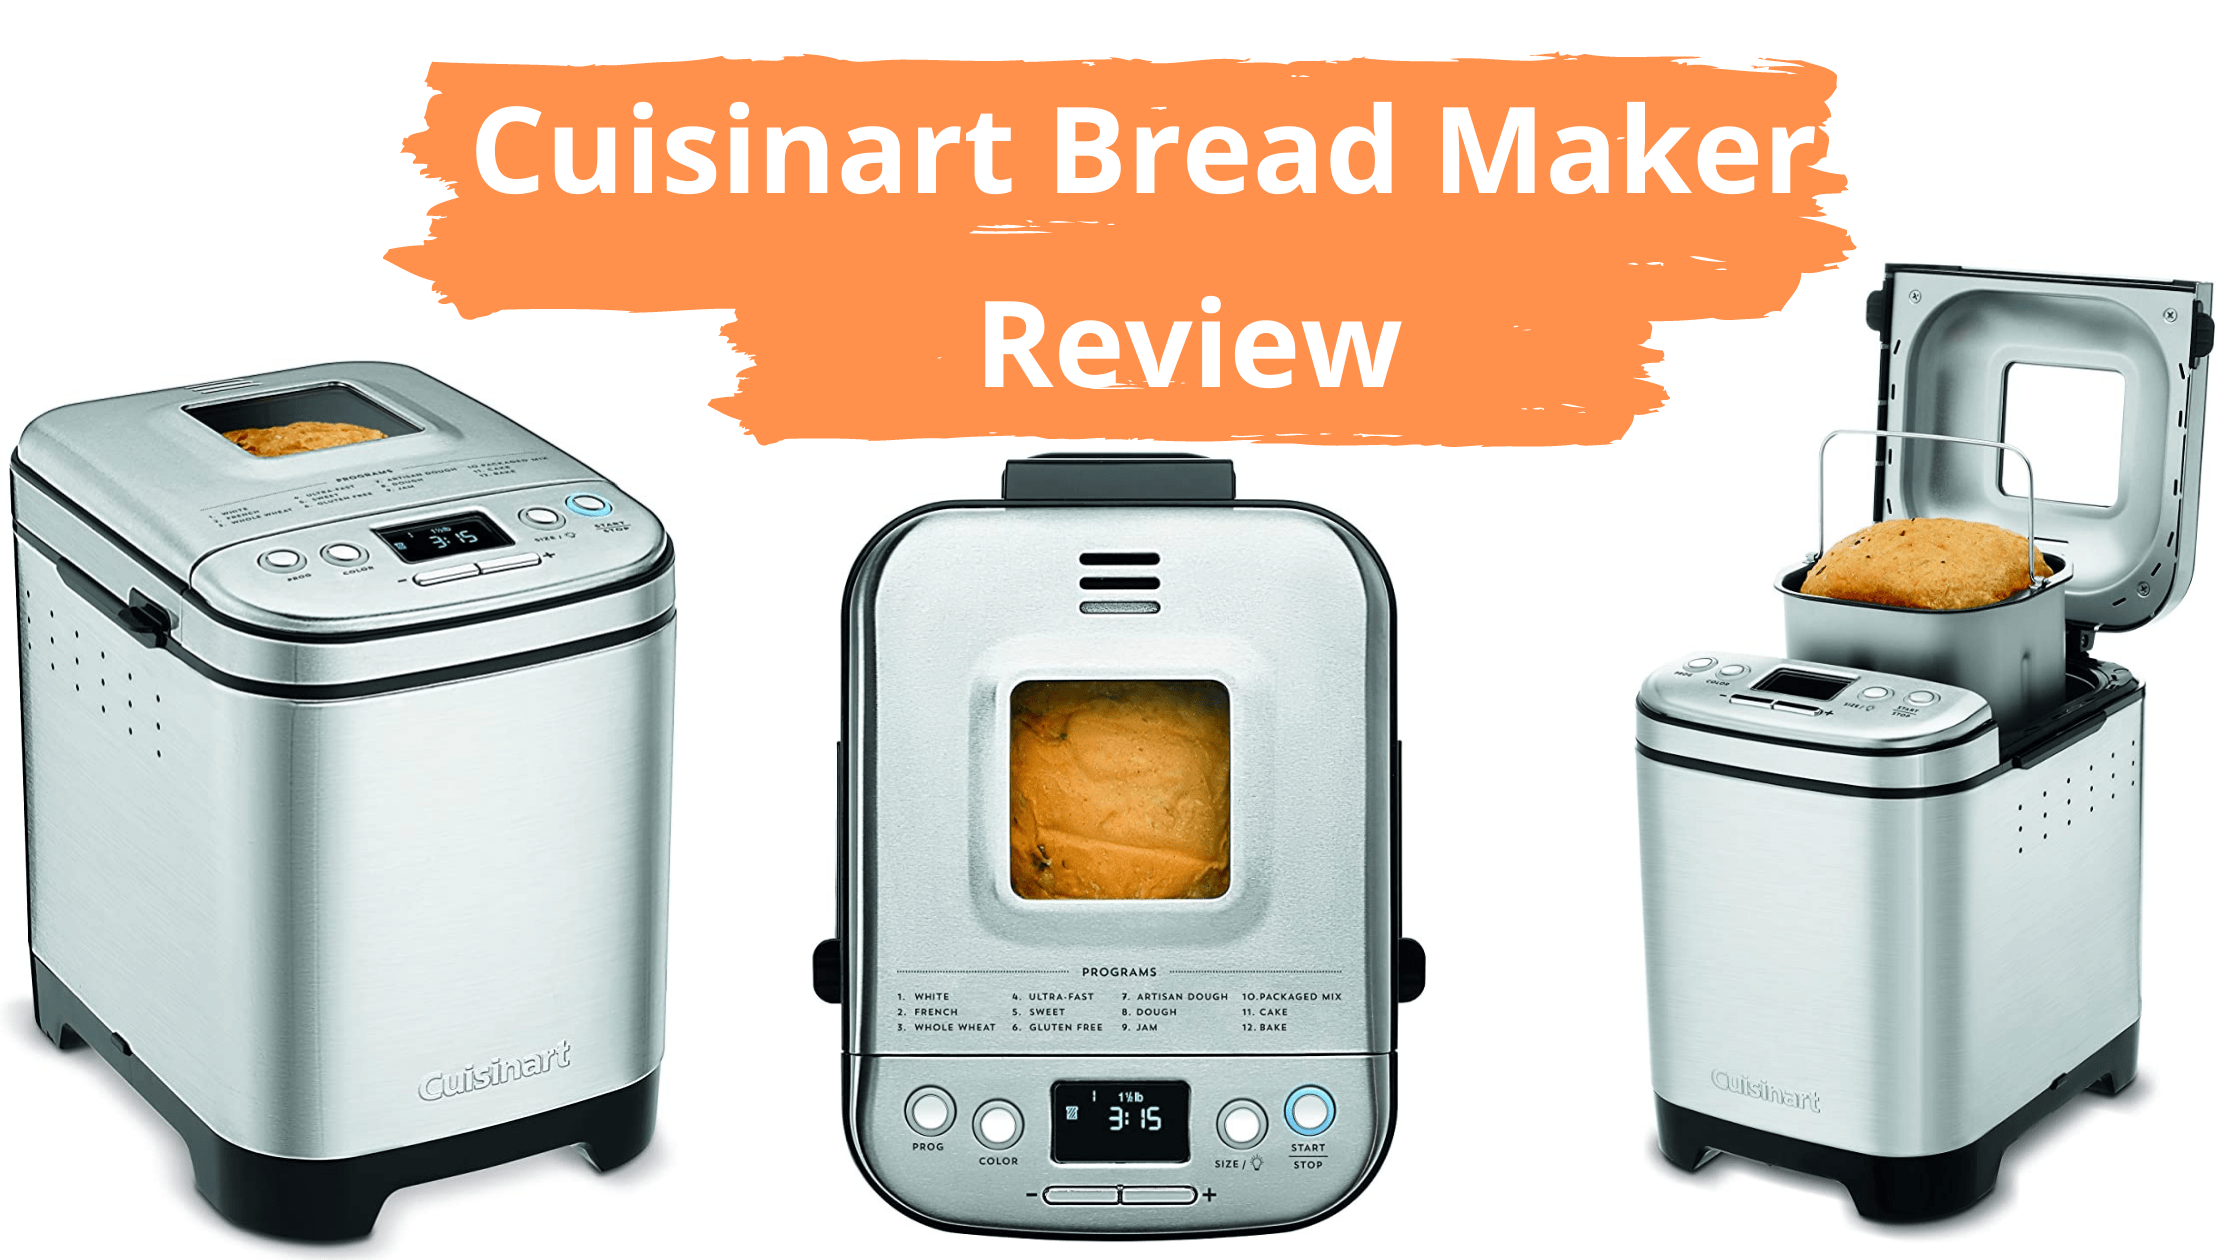 Cuisinart Bread Maker Review